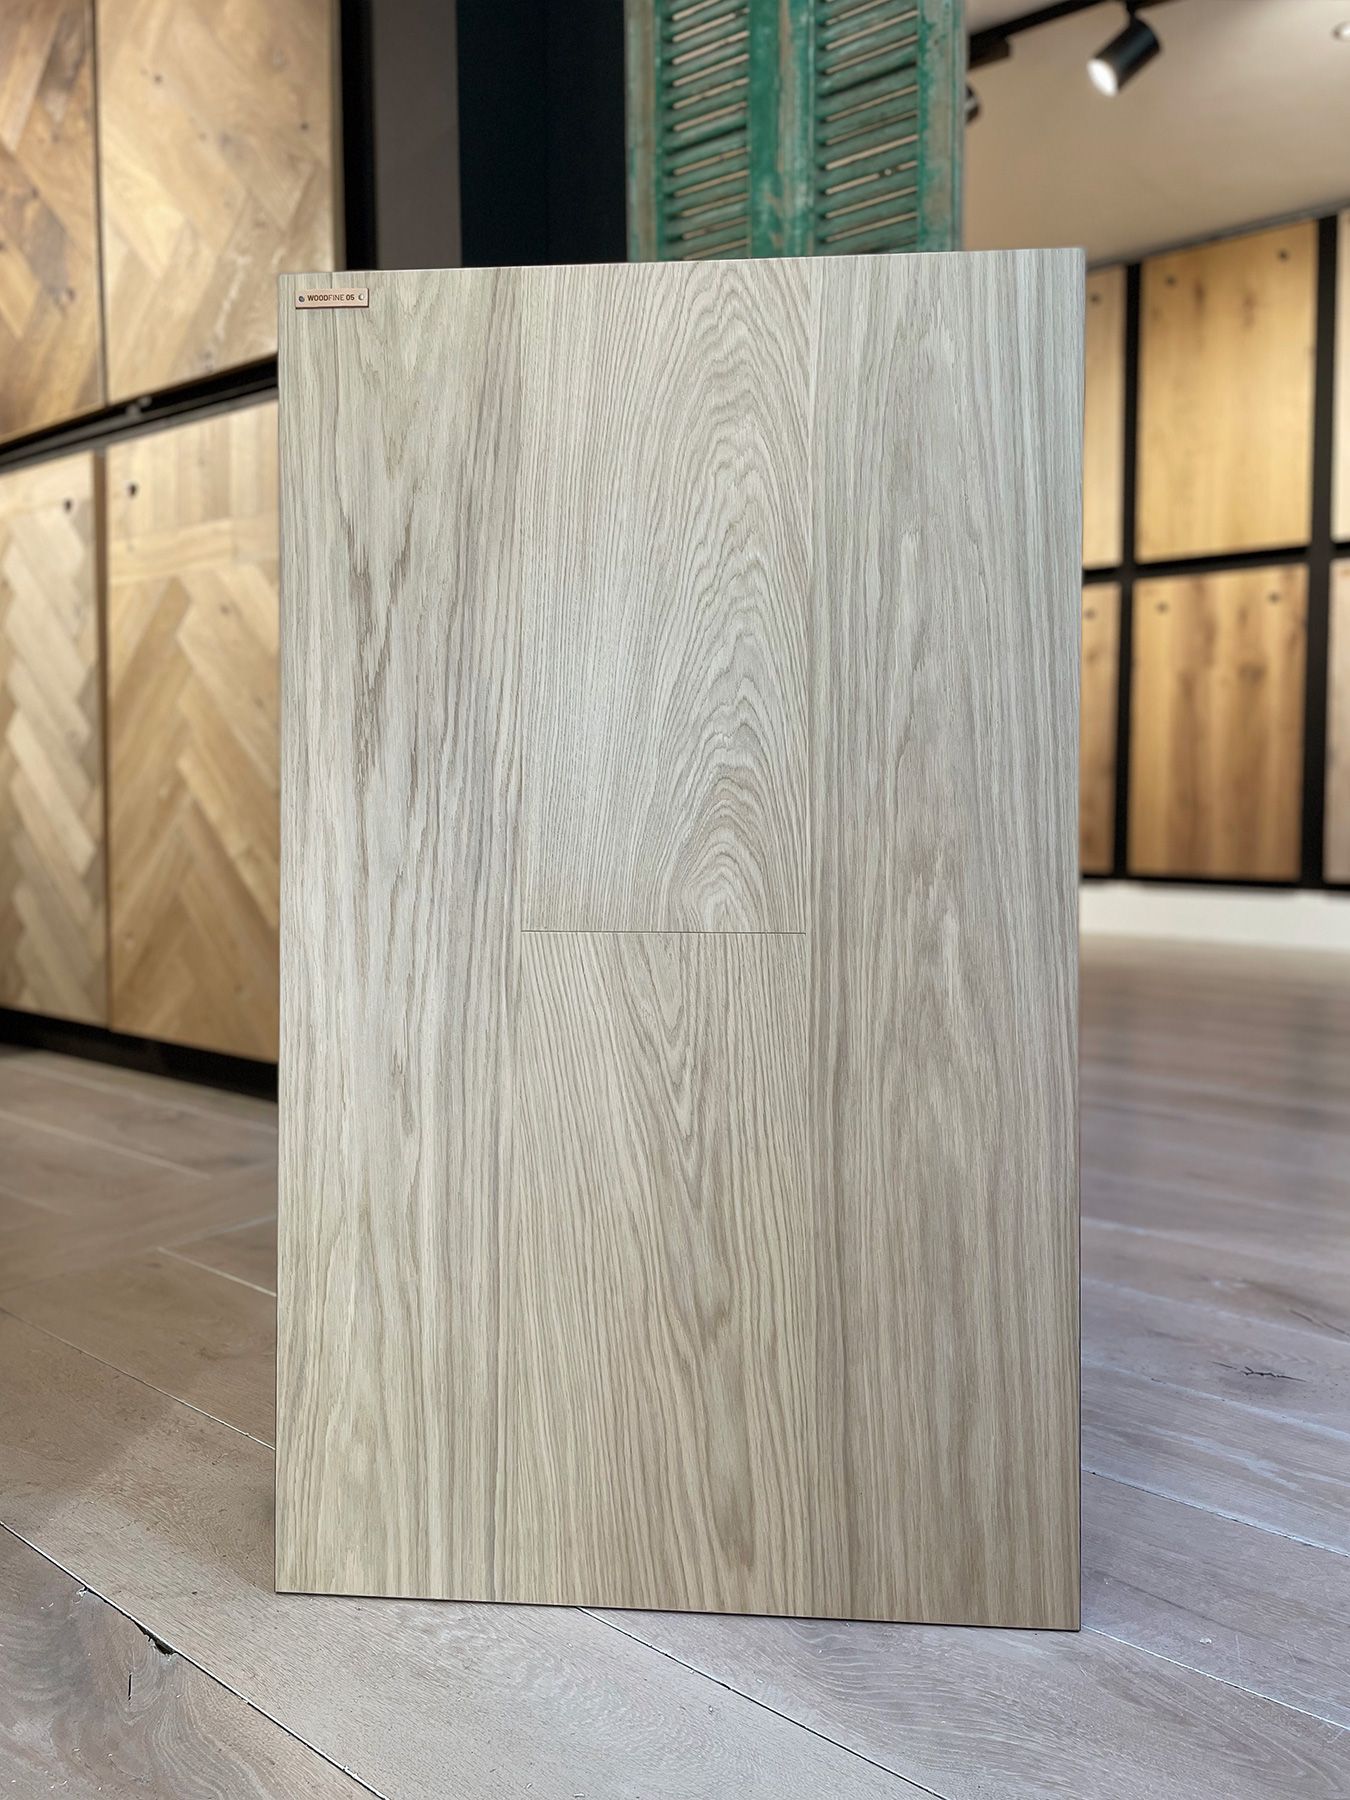 Collectie Budgetvloer WOODfine fineerparket XL planken extra breed gelakt | The Woodstore Scheveningen